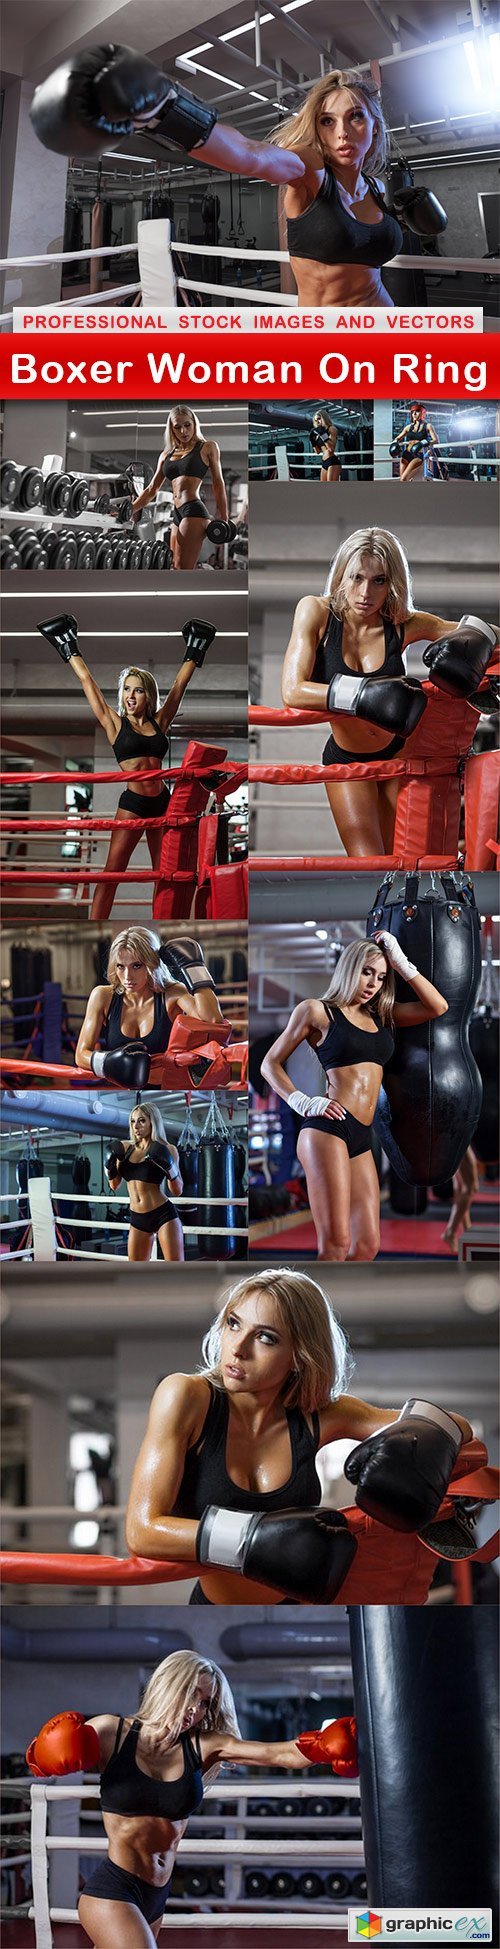 Boxer Woman On Ring - 11 UHQ JPEG